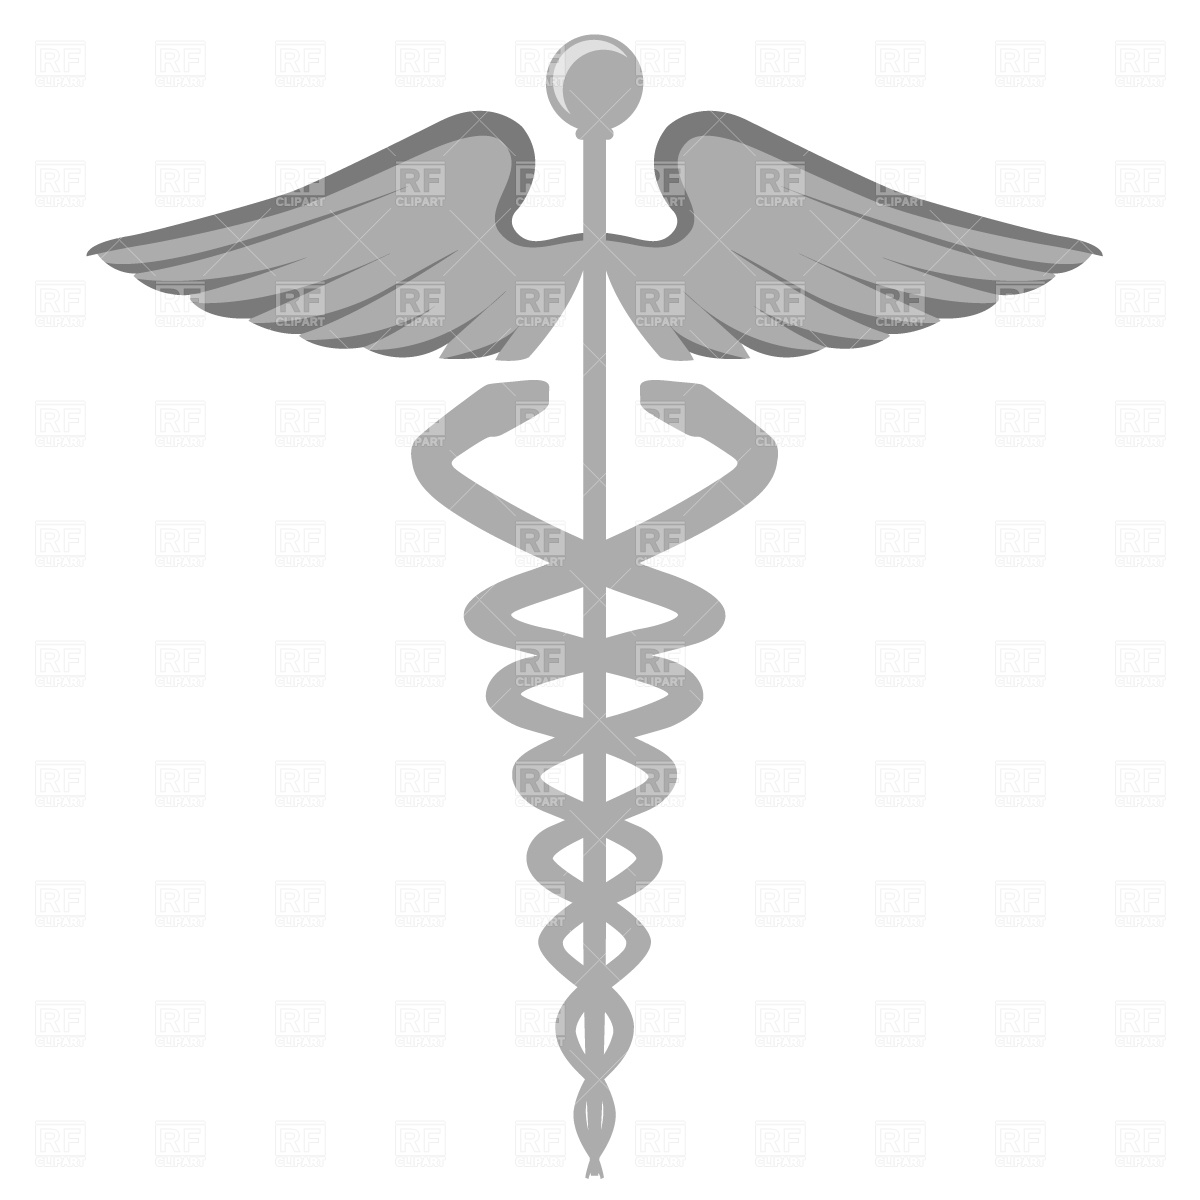 Caduceus Medical Symbol 788 Healthcare Medical Download Royalty